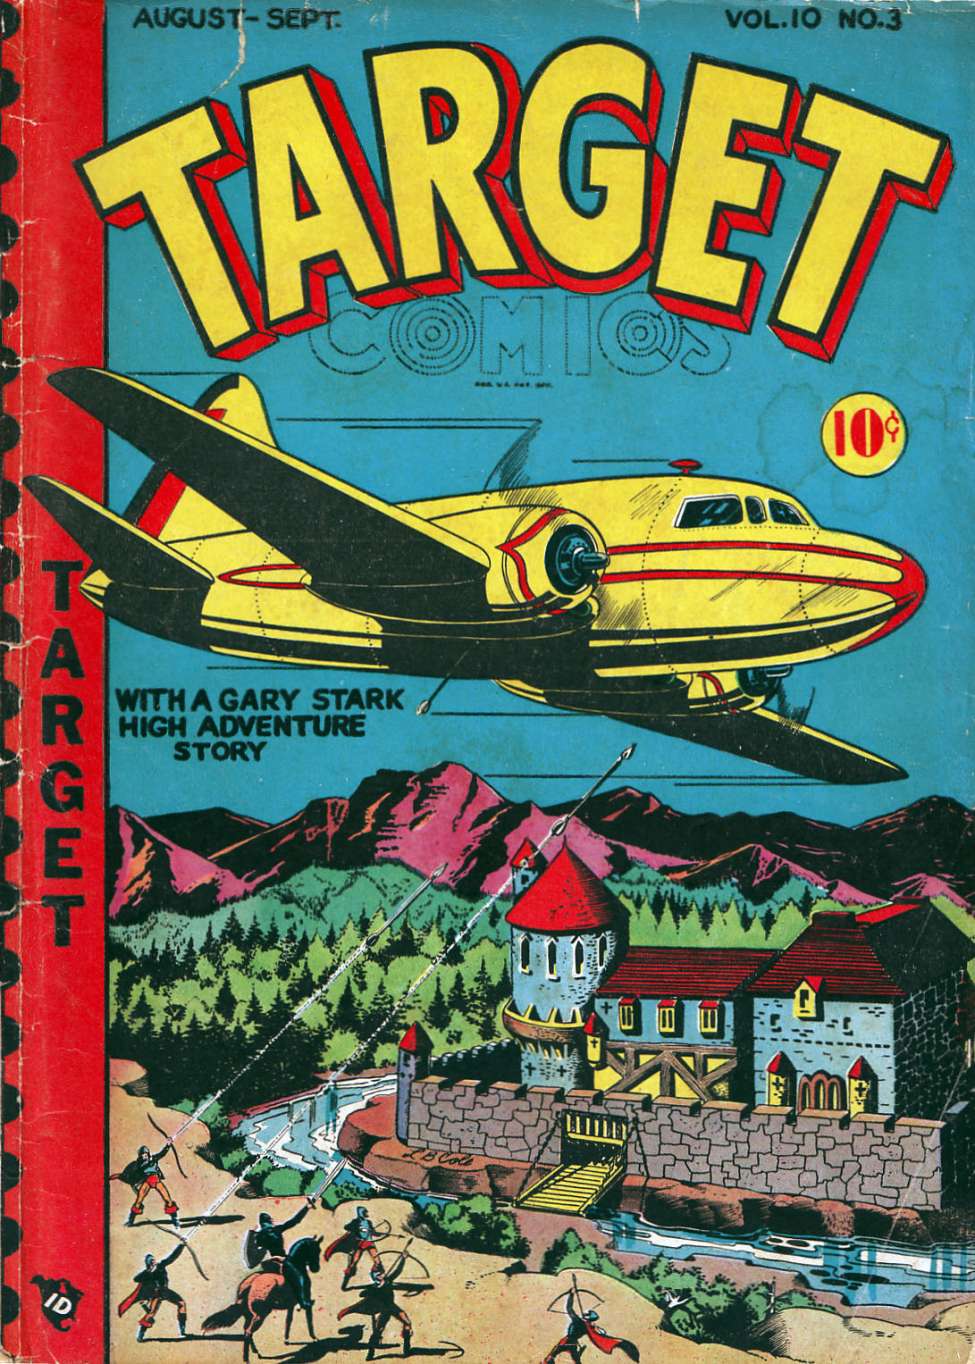 Comic Book Cover For Target Comics v10 3